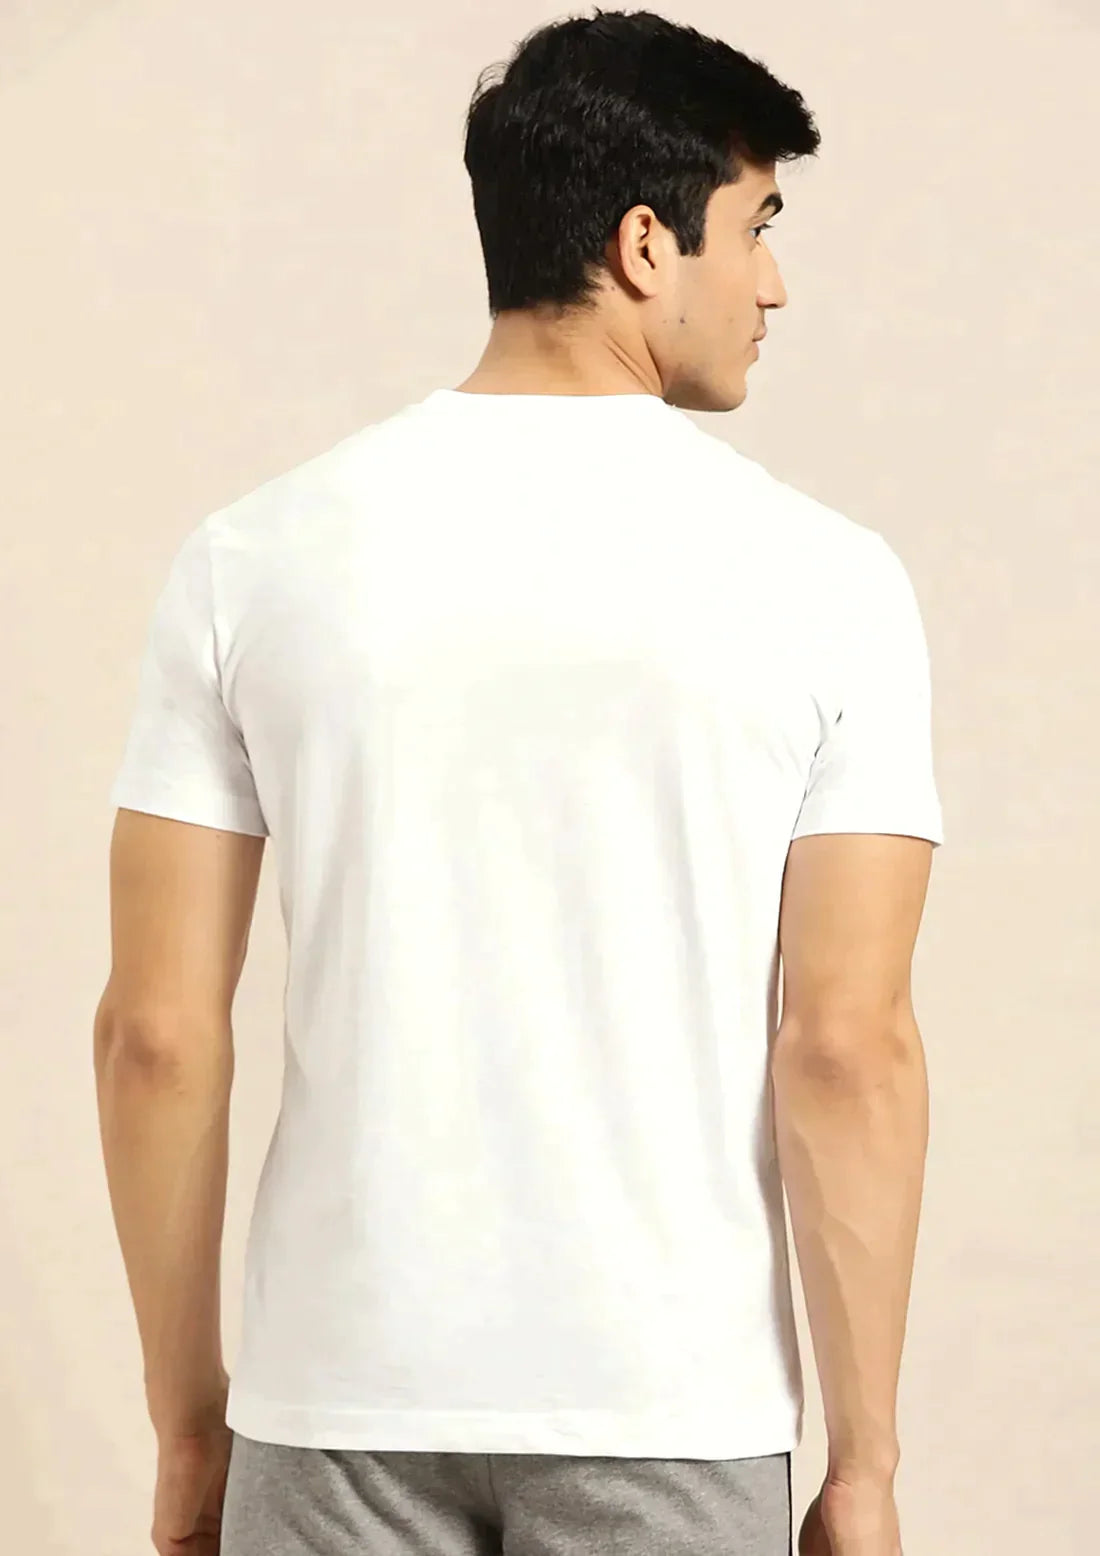 Brown Japenese Design Printed Mens Cotton Half Sleeves Shirts